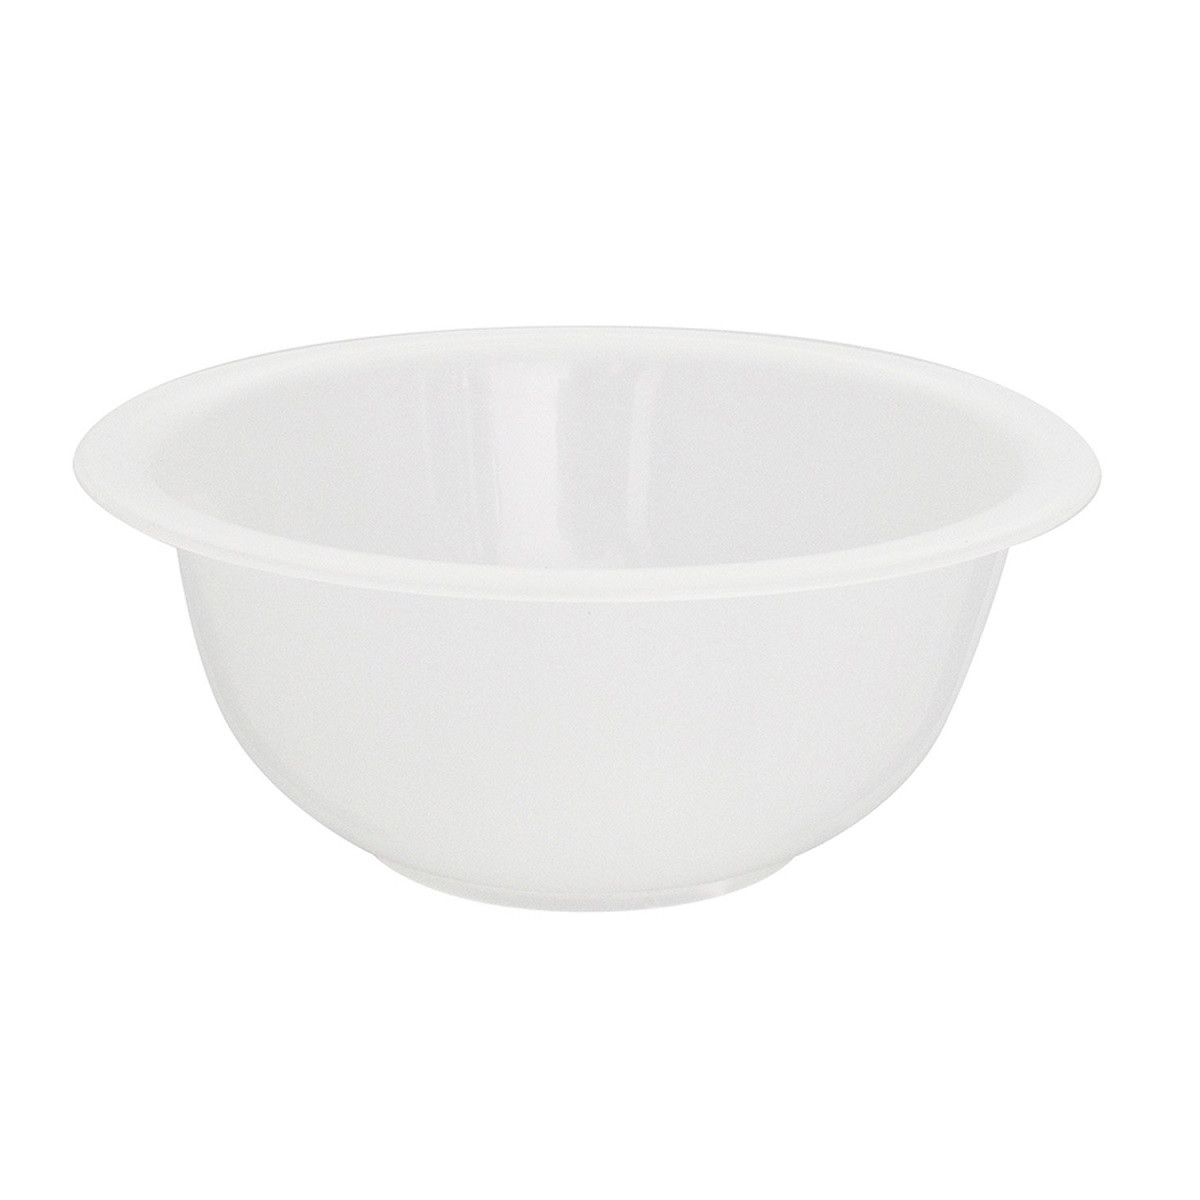 Frying bowl plastic, 28 cm.